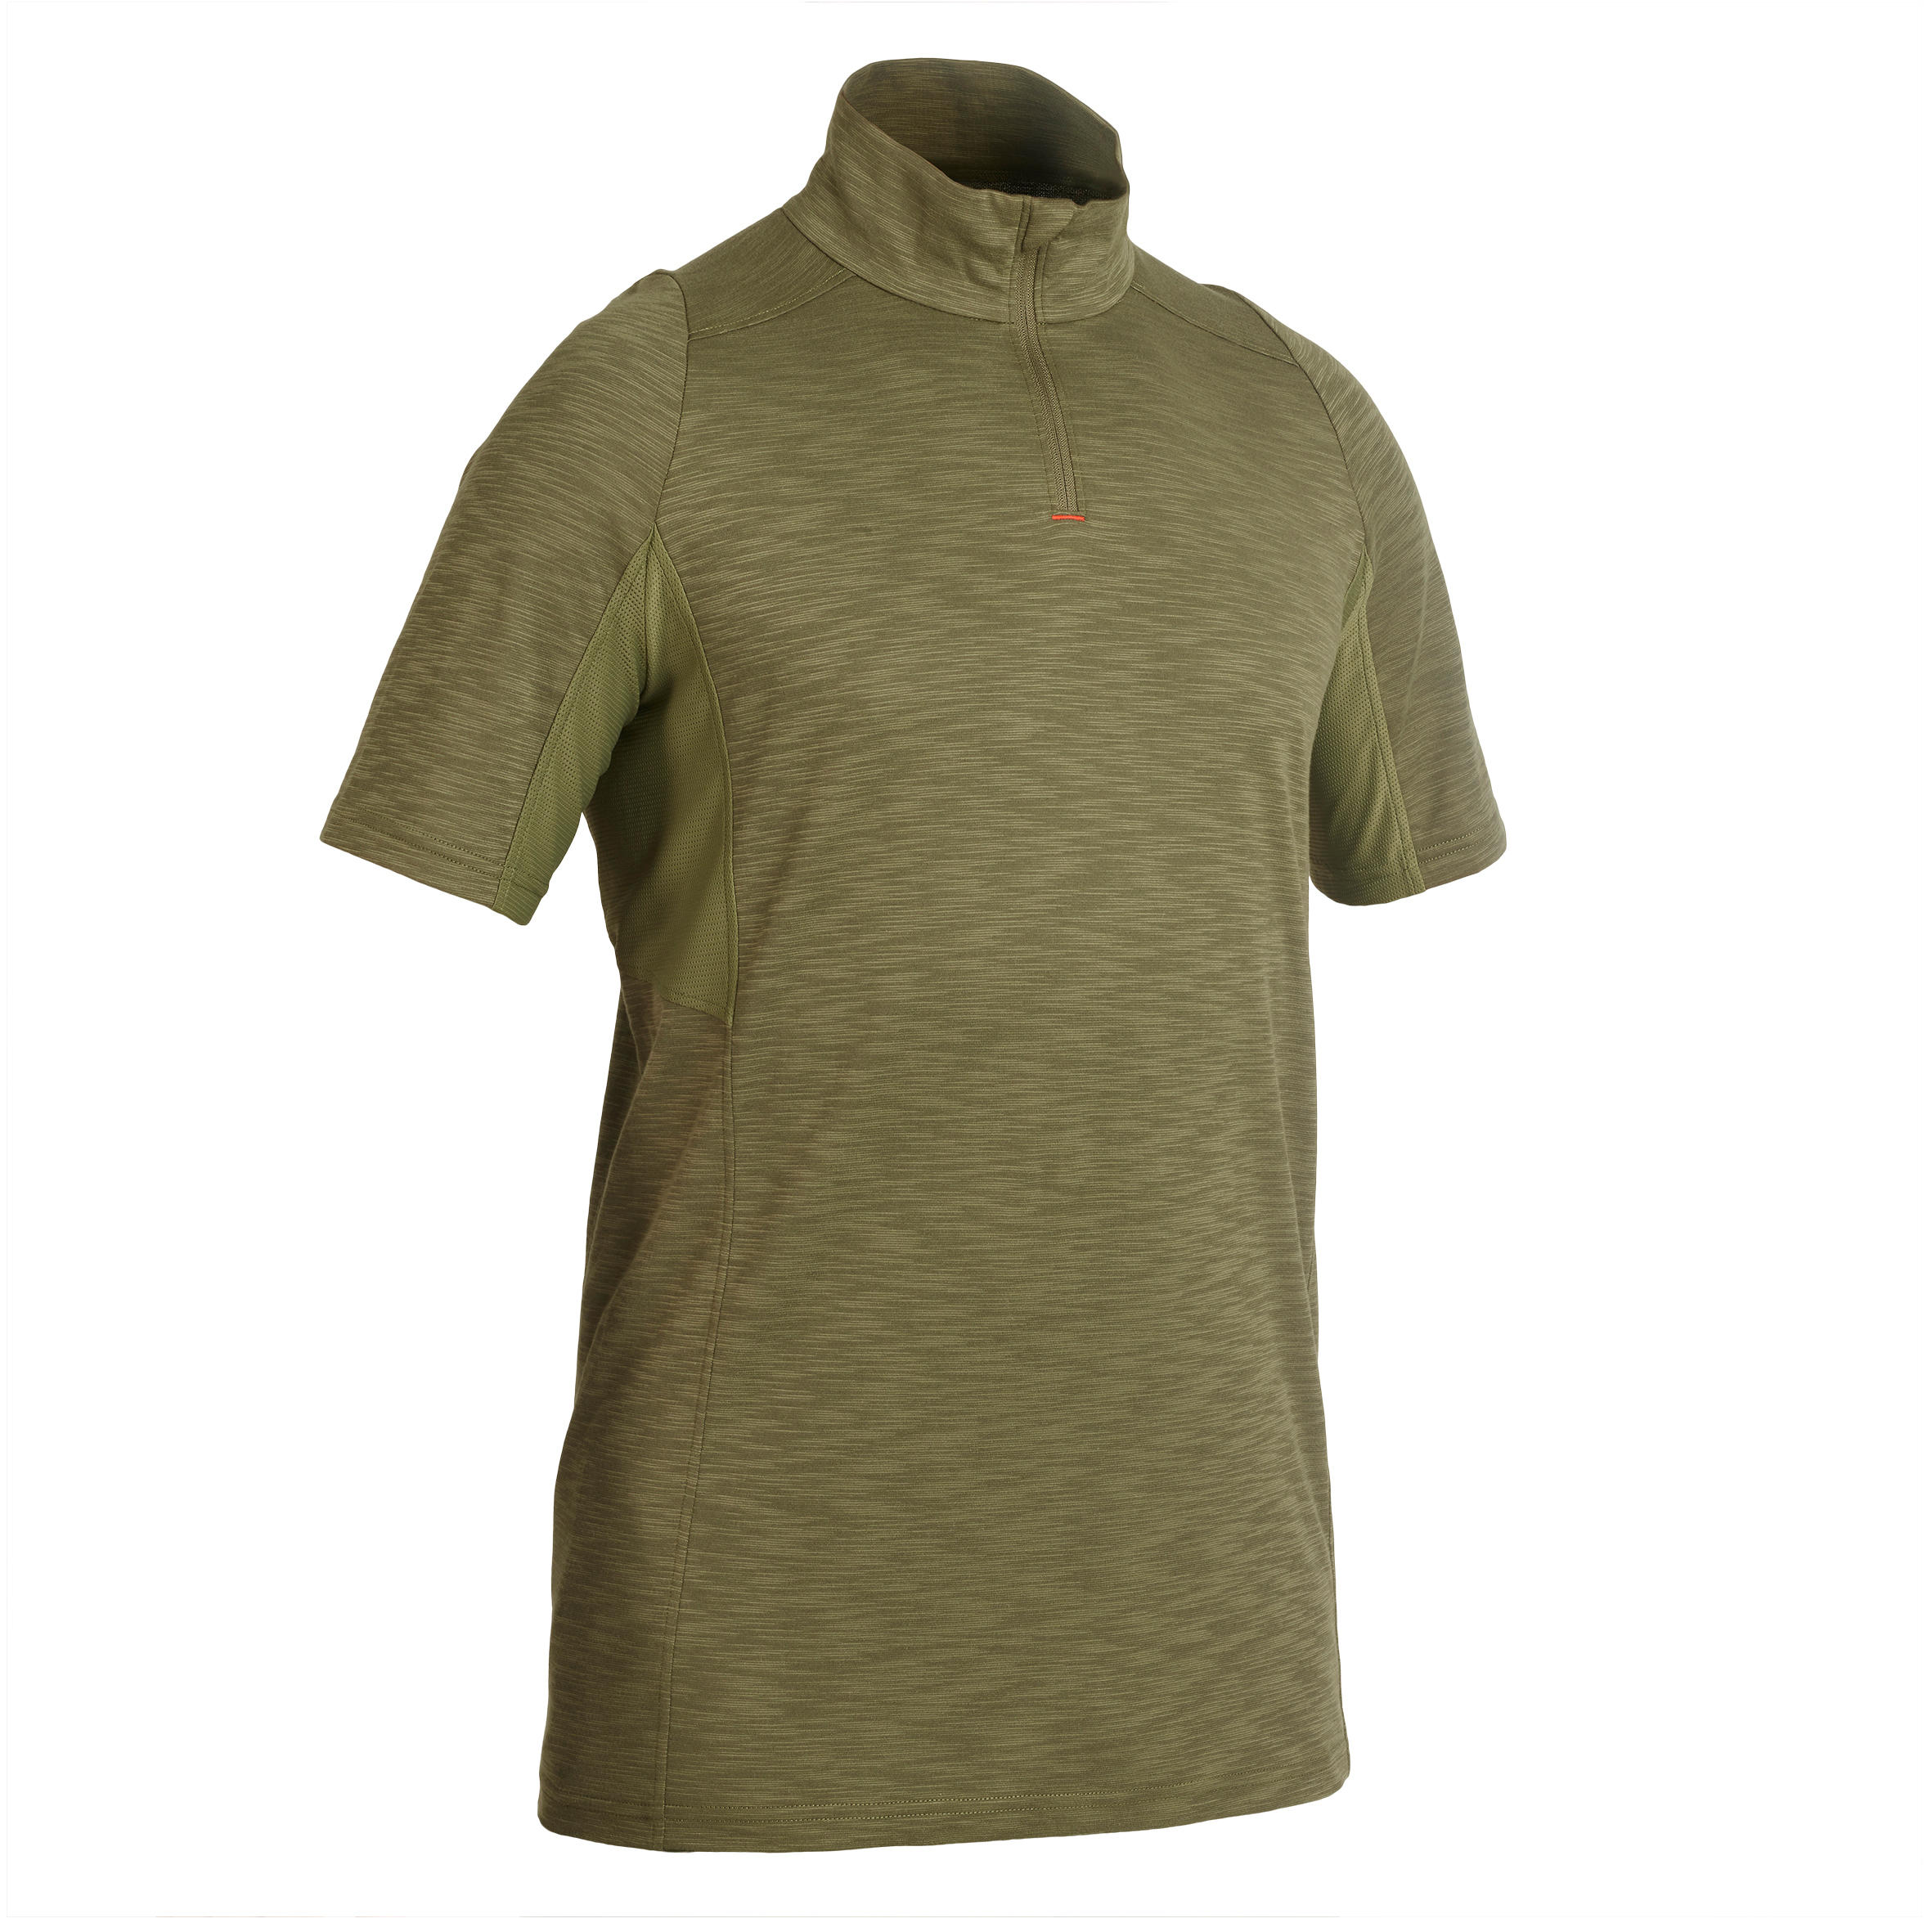 SOLOGNAC 500 Lightweight, Breathable Short-Sleeve Hunting T-Shirt - Green